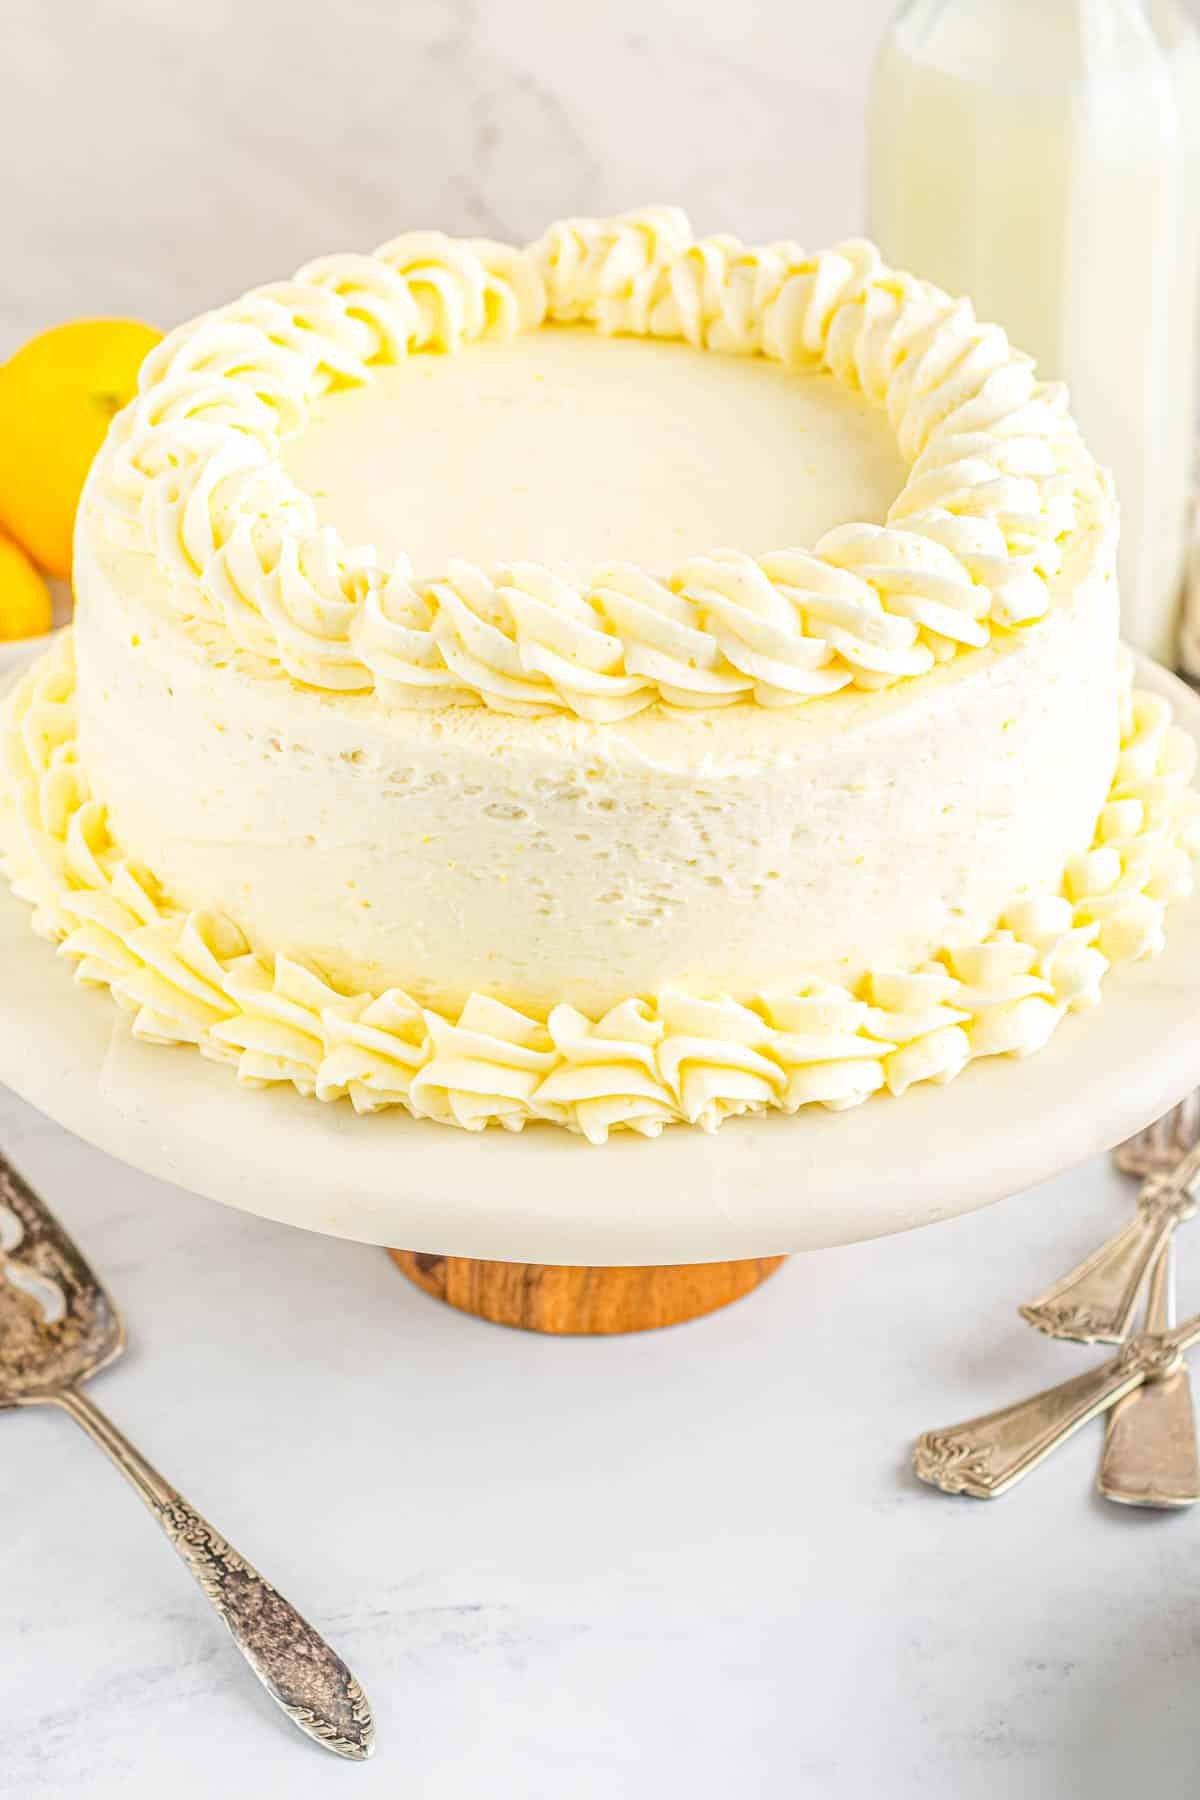 The finished Lemon Velvet Cake on a cake stand.